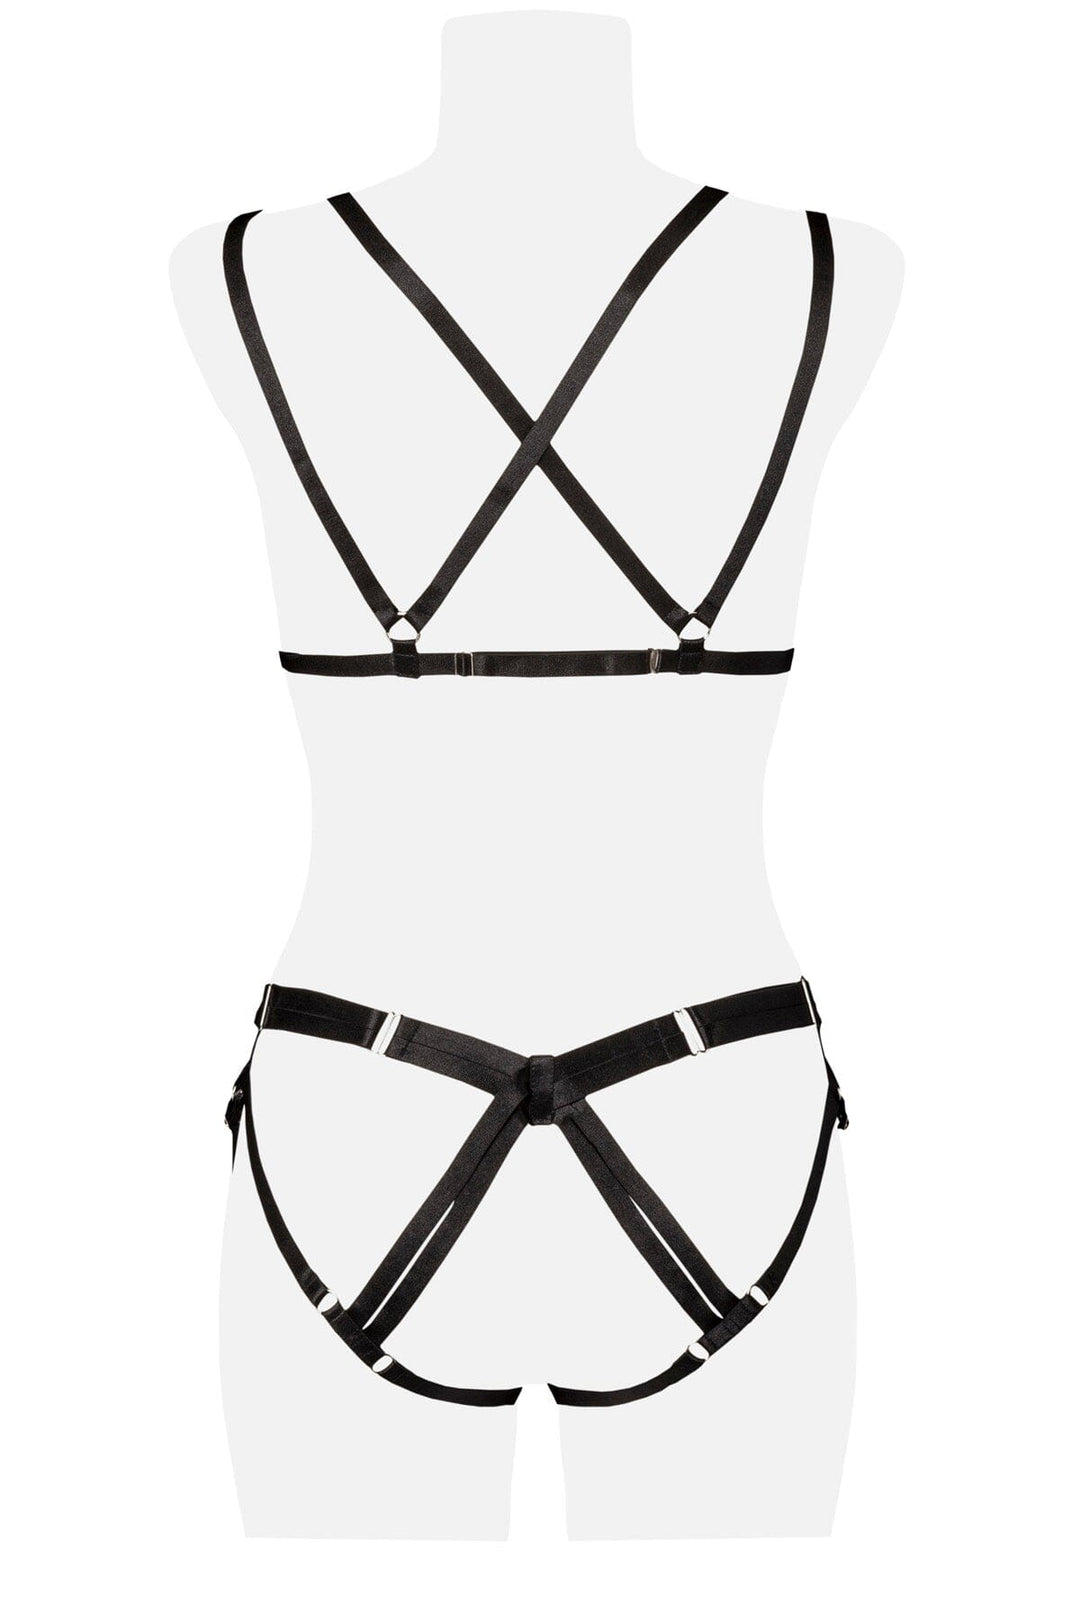 3 Piece Suspender Open Cup Bra Set w/Pasties-Fetish Sets-Grey Velvet-SEXYSHOES.COM